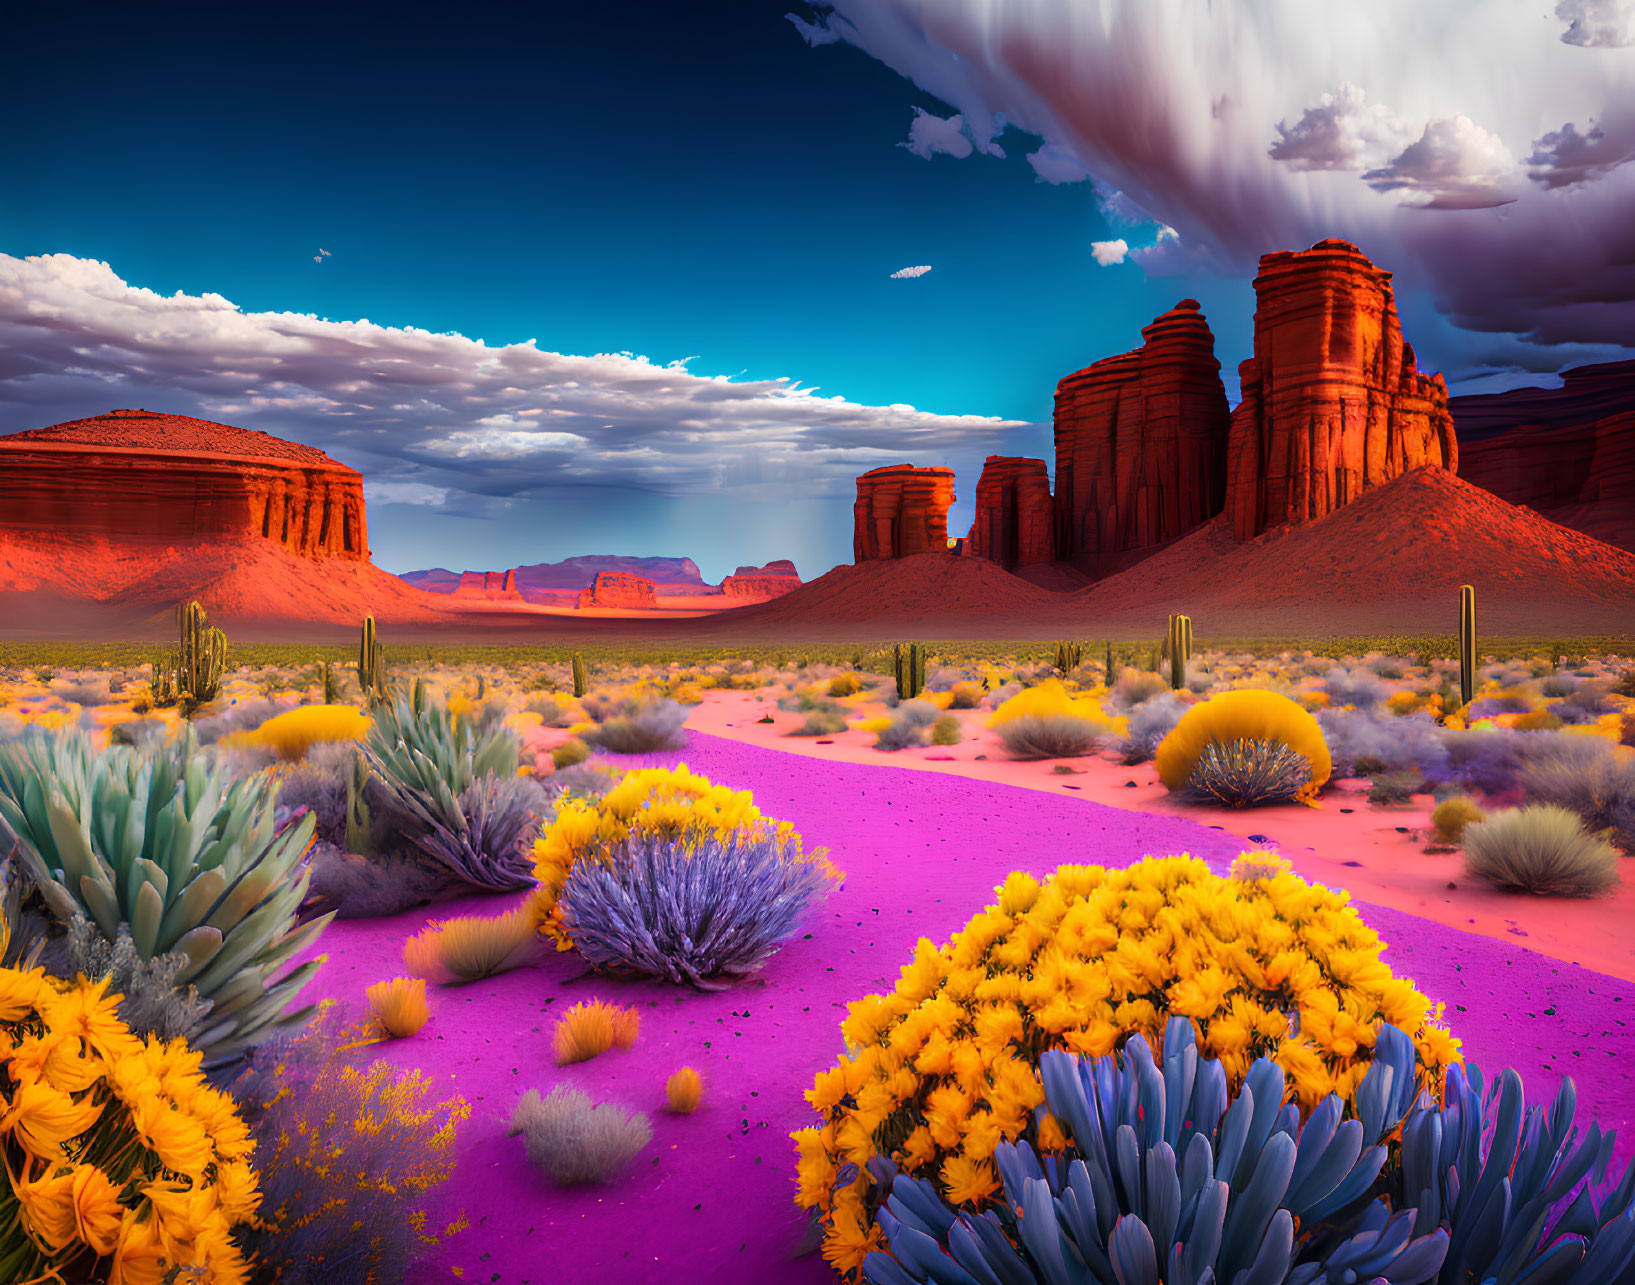 Colorful Flora and Red Sandstone Cliffs in Vibrant Desert Scene